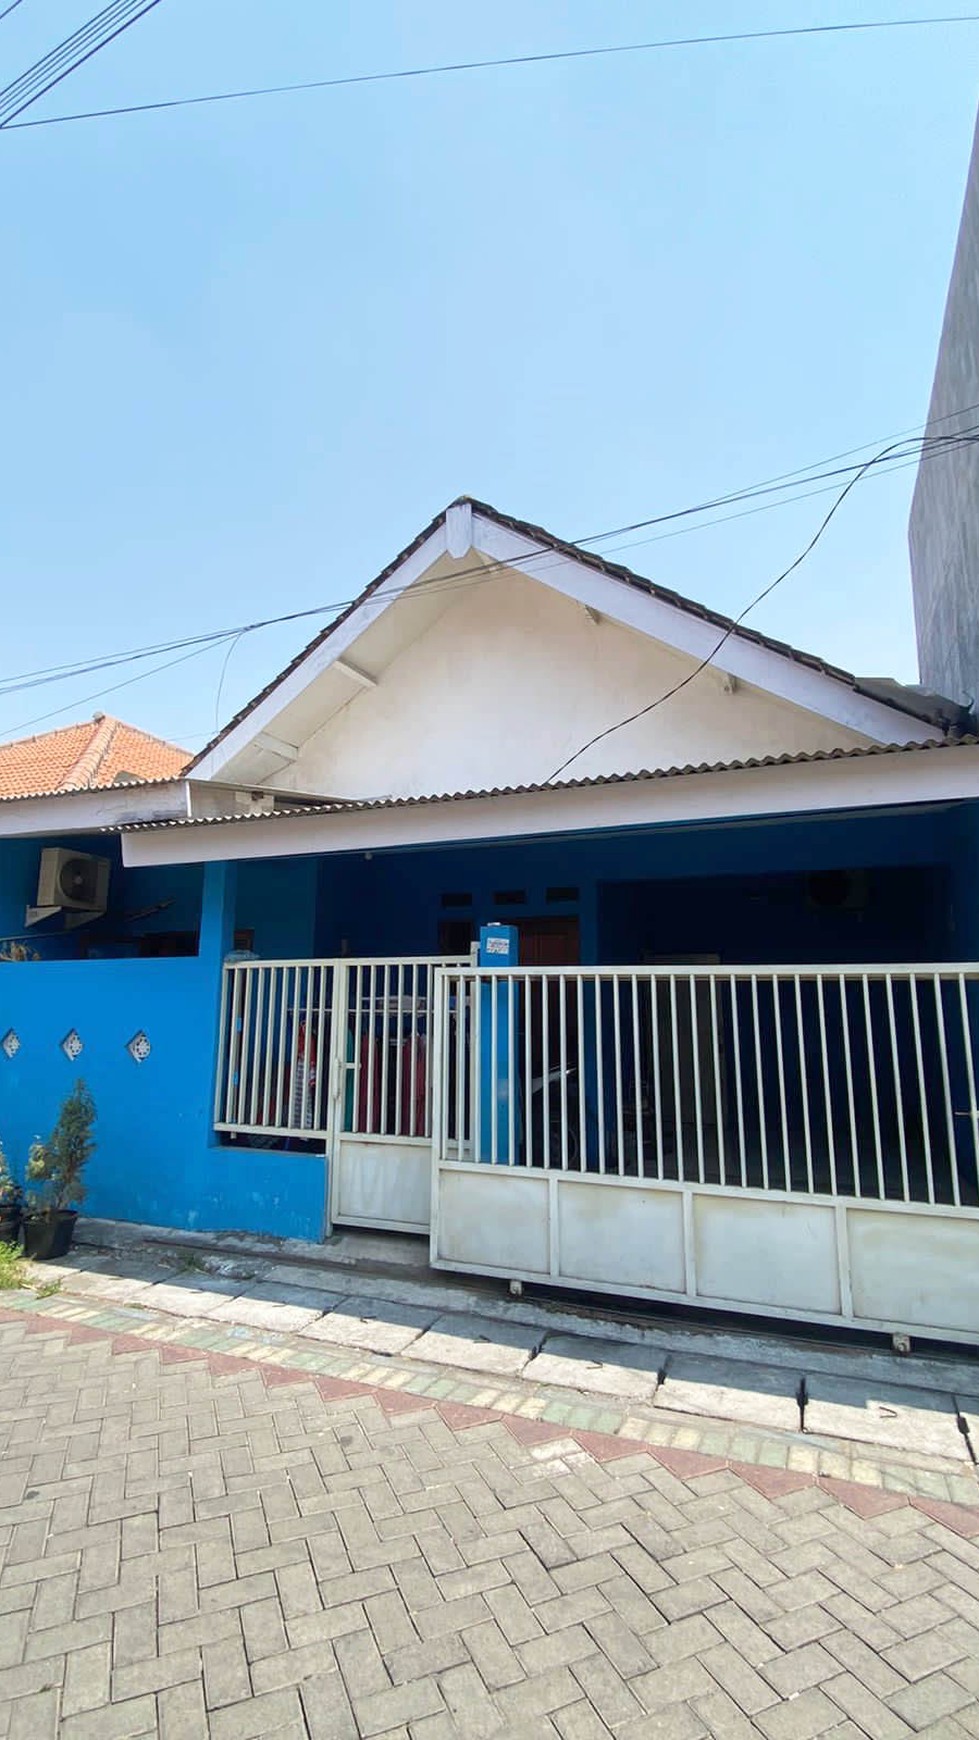 Rumah di Kedurus Sawah Gede Surabaya Barat, Bagus + Terawat, 1 Lantai, SHM